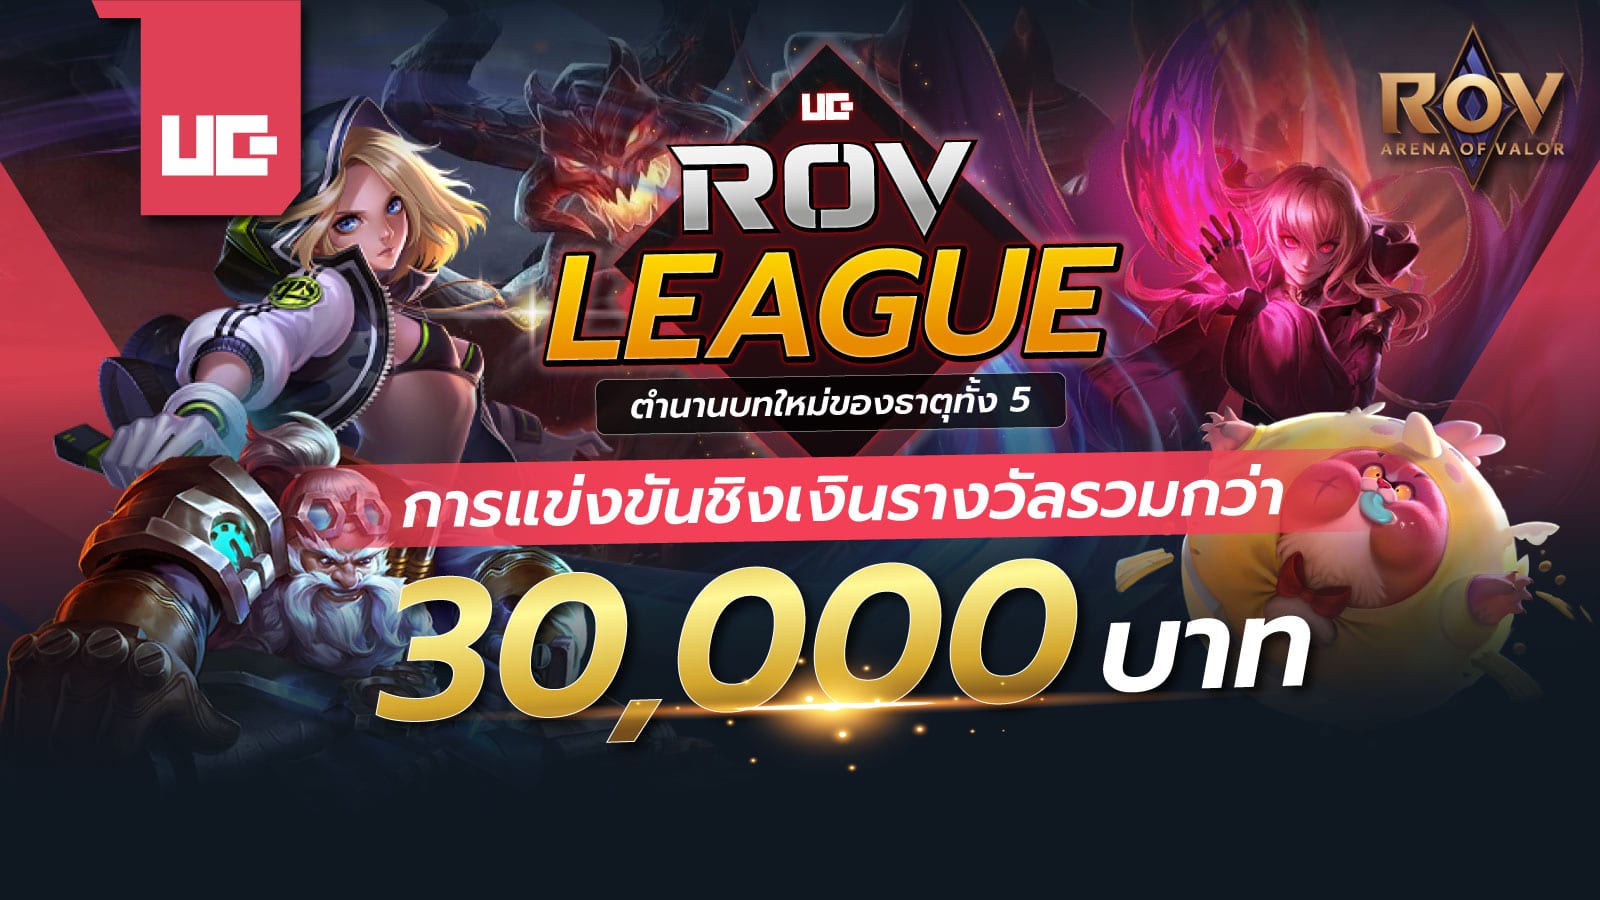 UG ROV League การแข่งขันชิงเงินรางวัลรวมกว่า 30,000 บาท